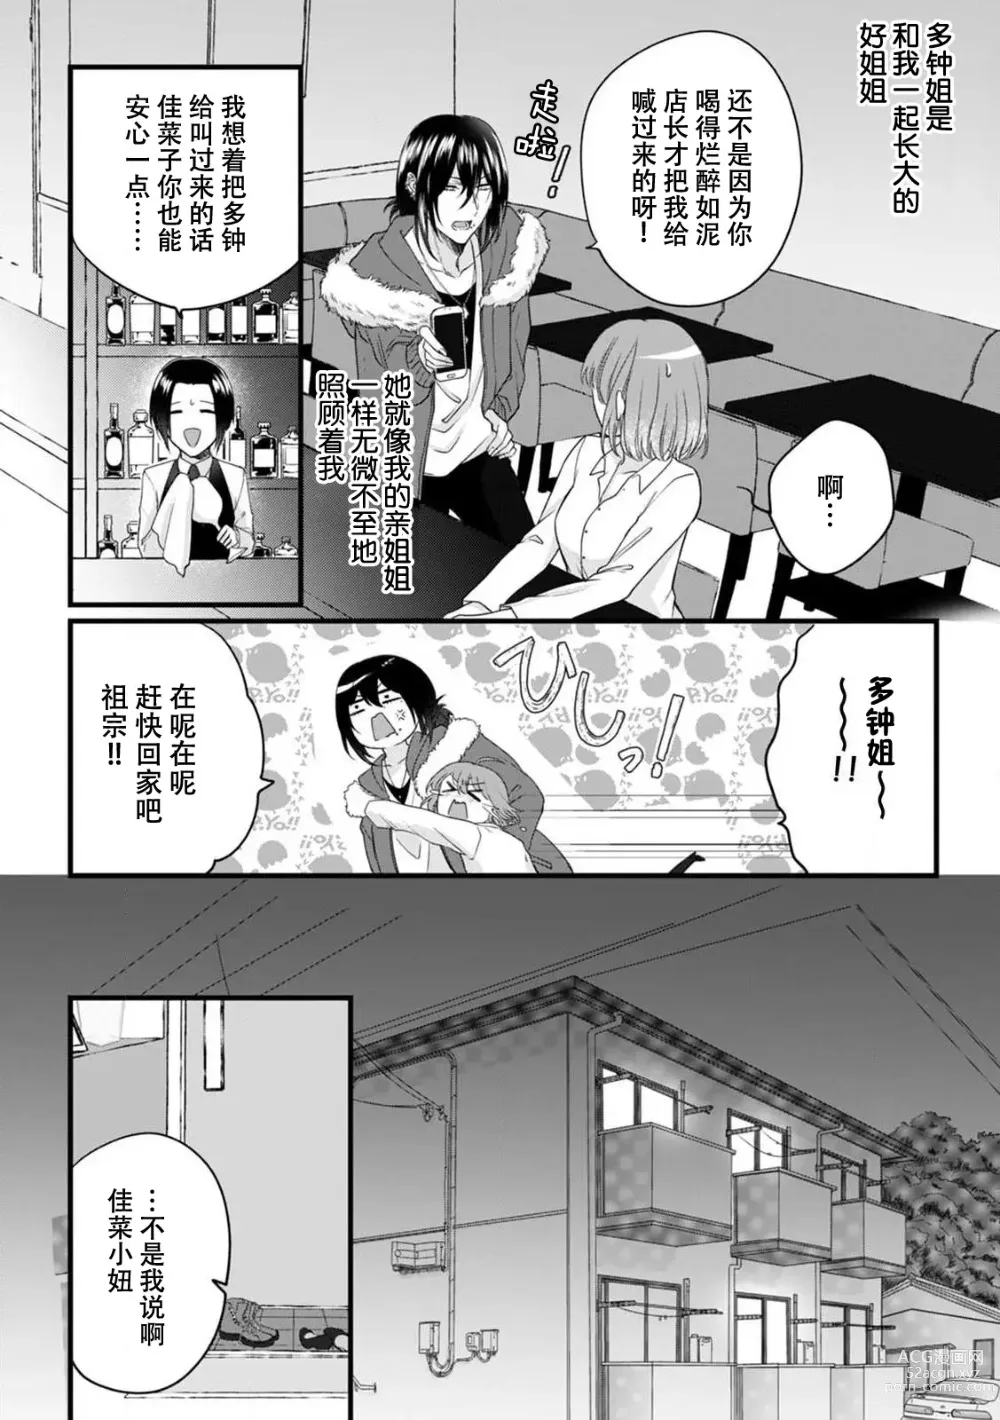 Page 4 of manga 弄湿我的是青梅竹马的男大姐 第一次见到……他认真的雄性一面。 1-5 end